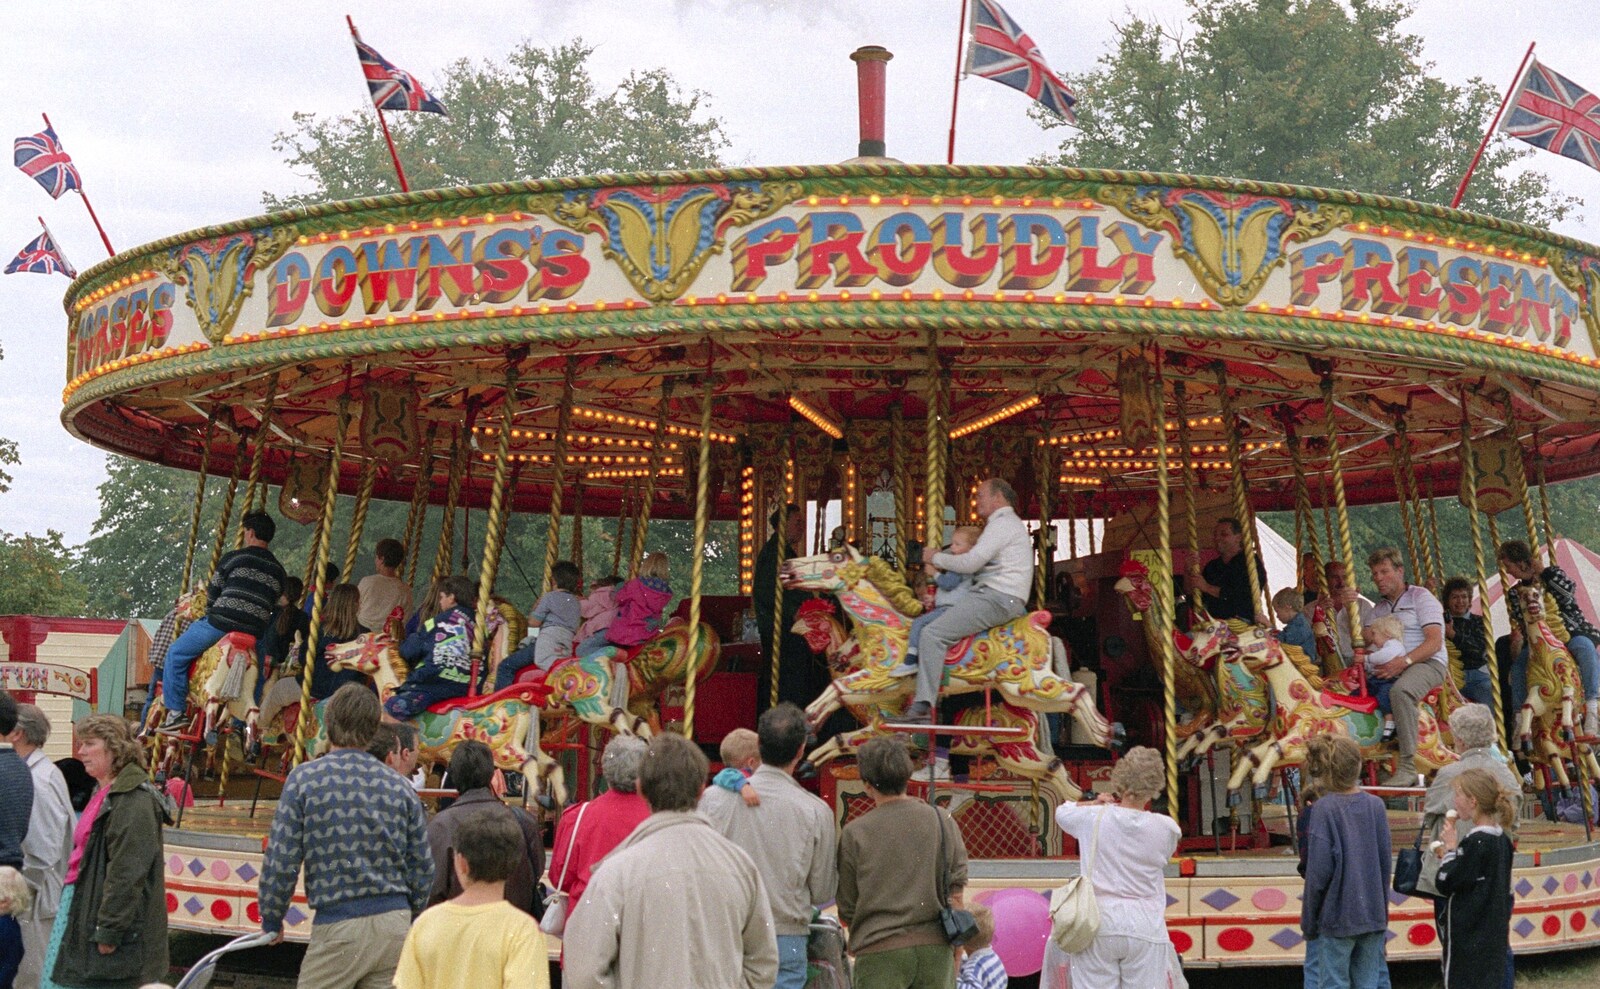 The Downs's gallopers from The Henham Steam Fair, Henham, Suffolk - 19th September 1990